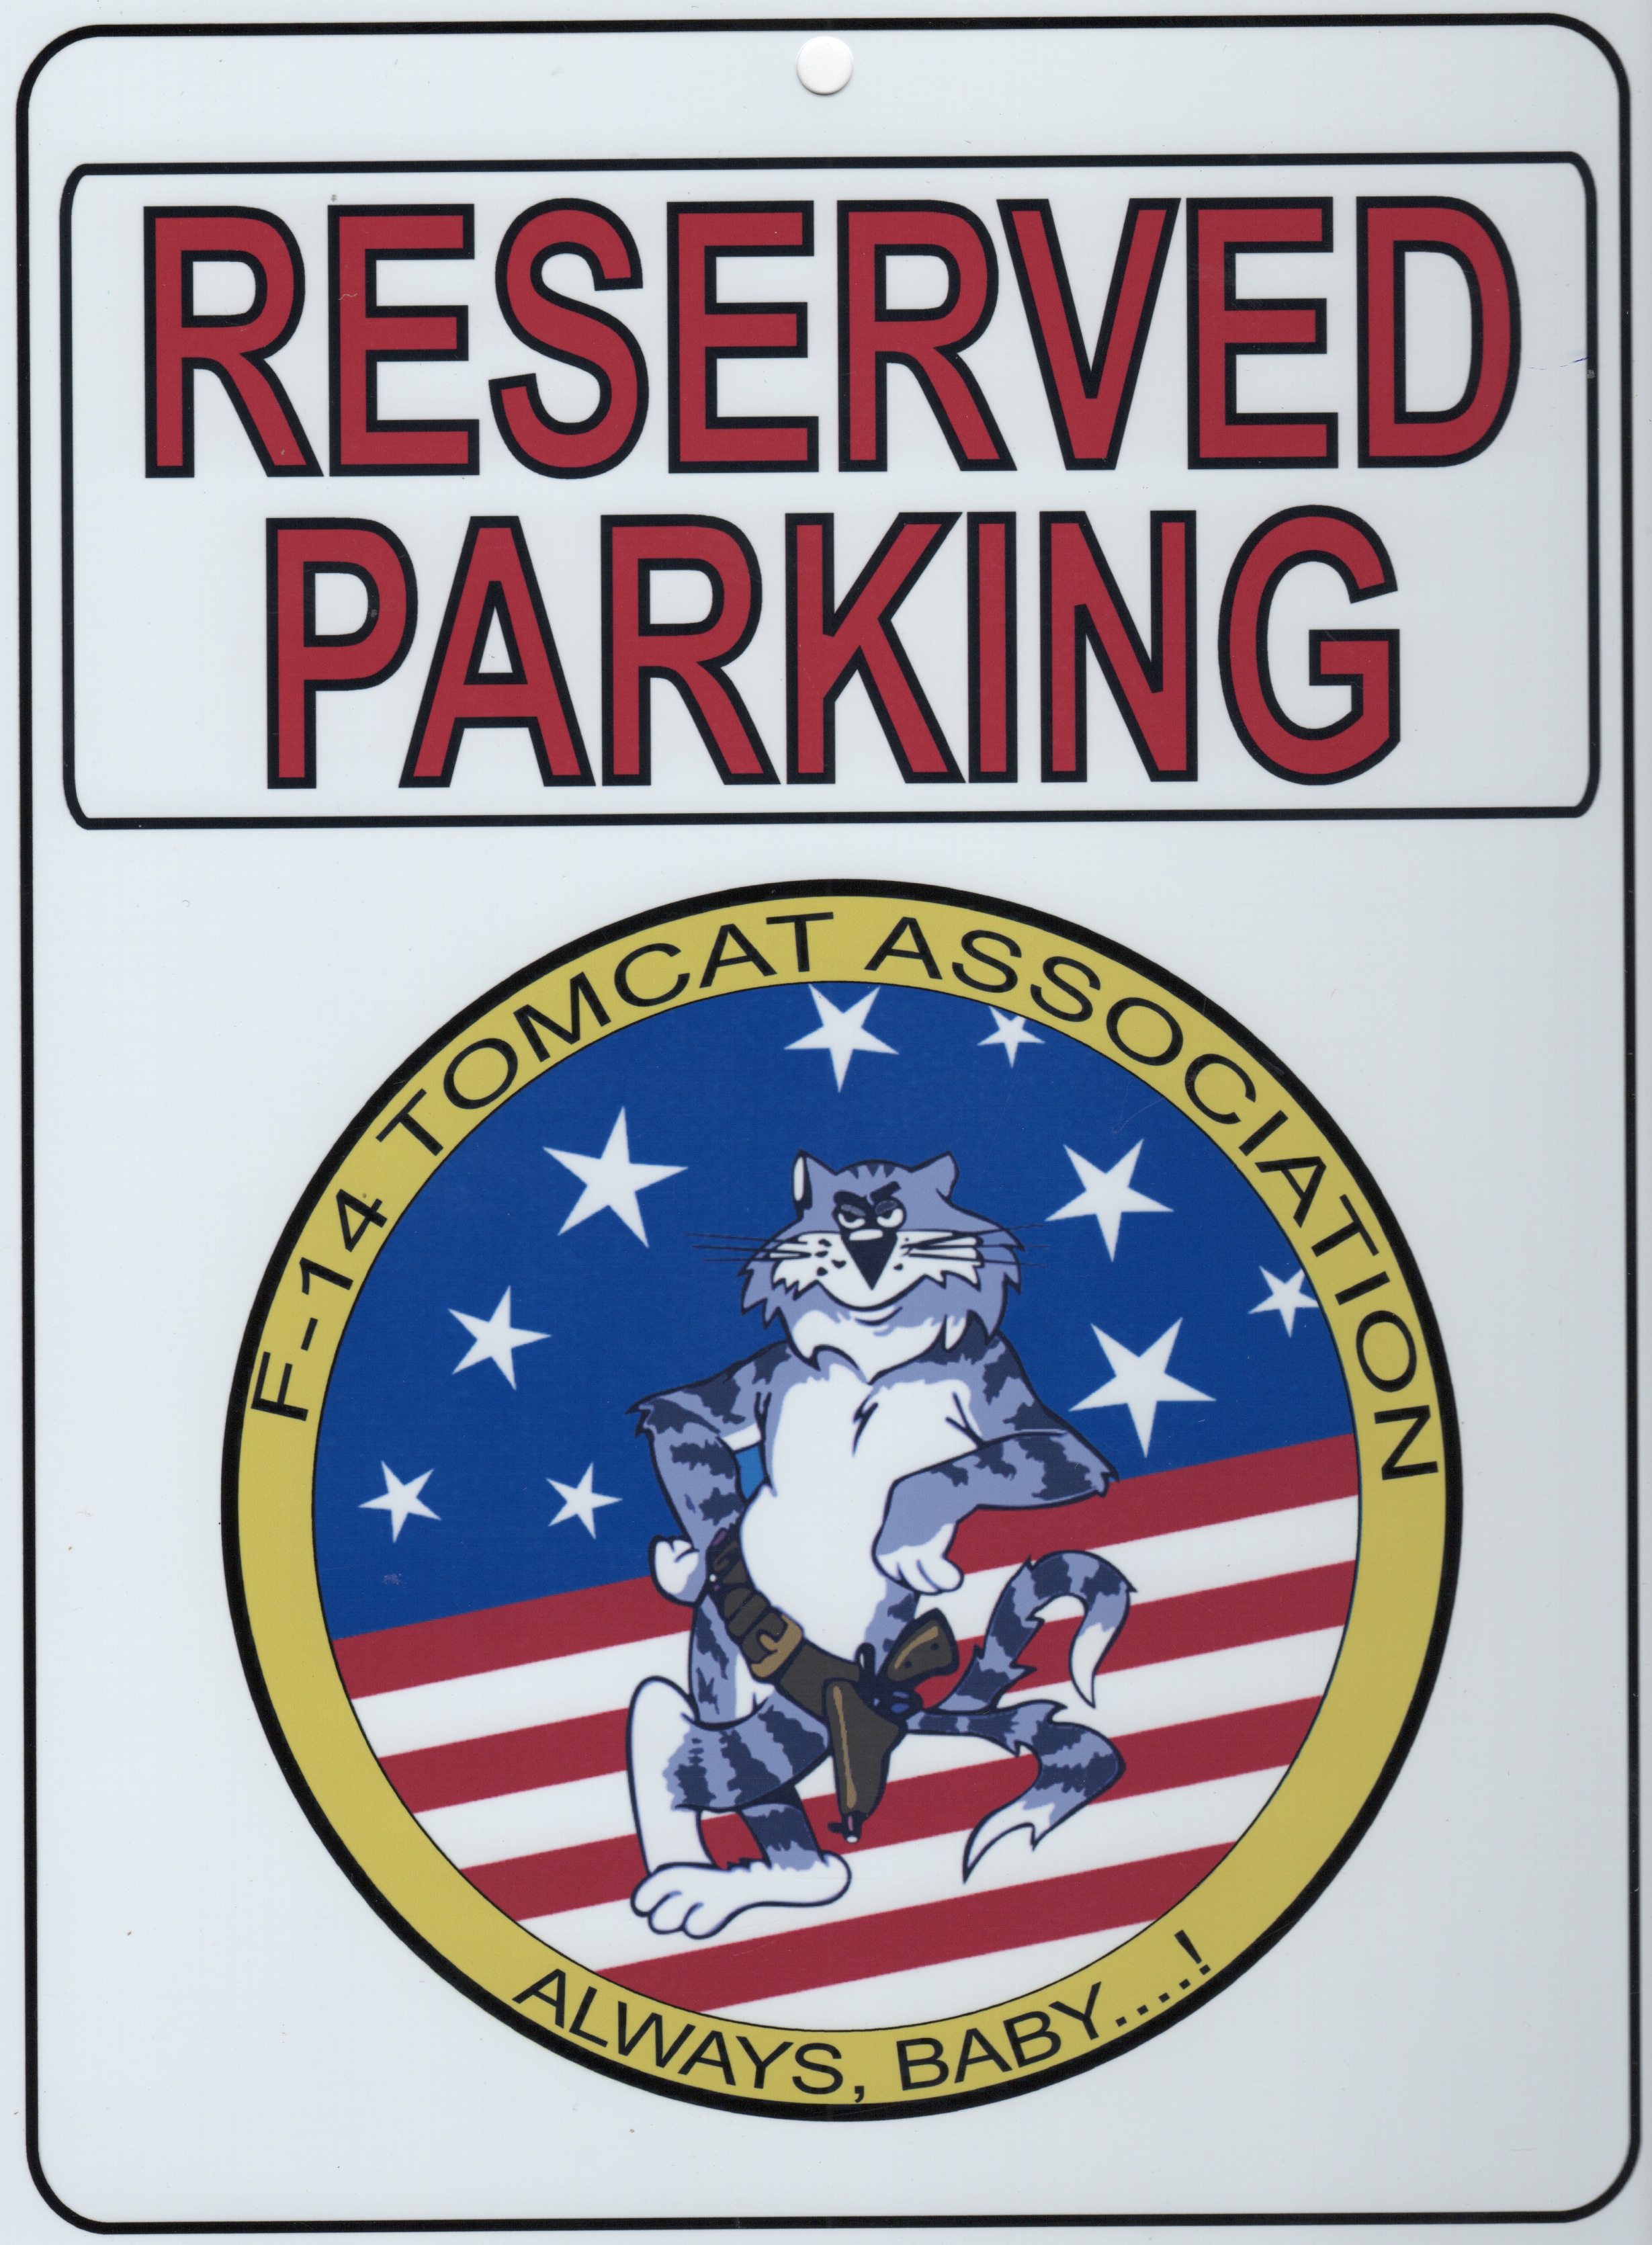 Tomcat Assoc 'Parking Placard'